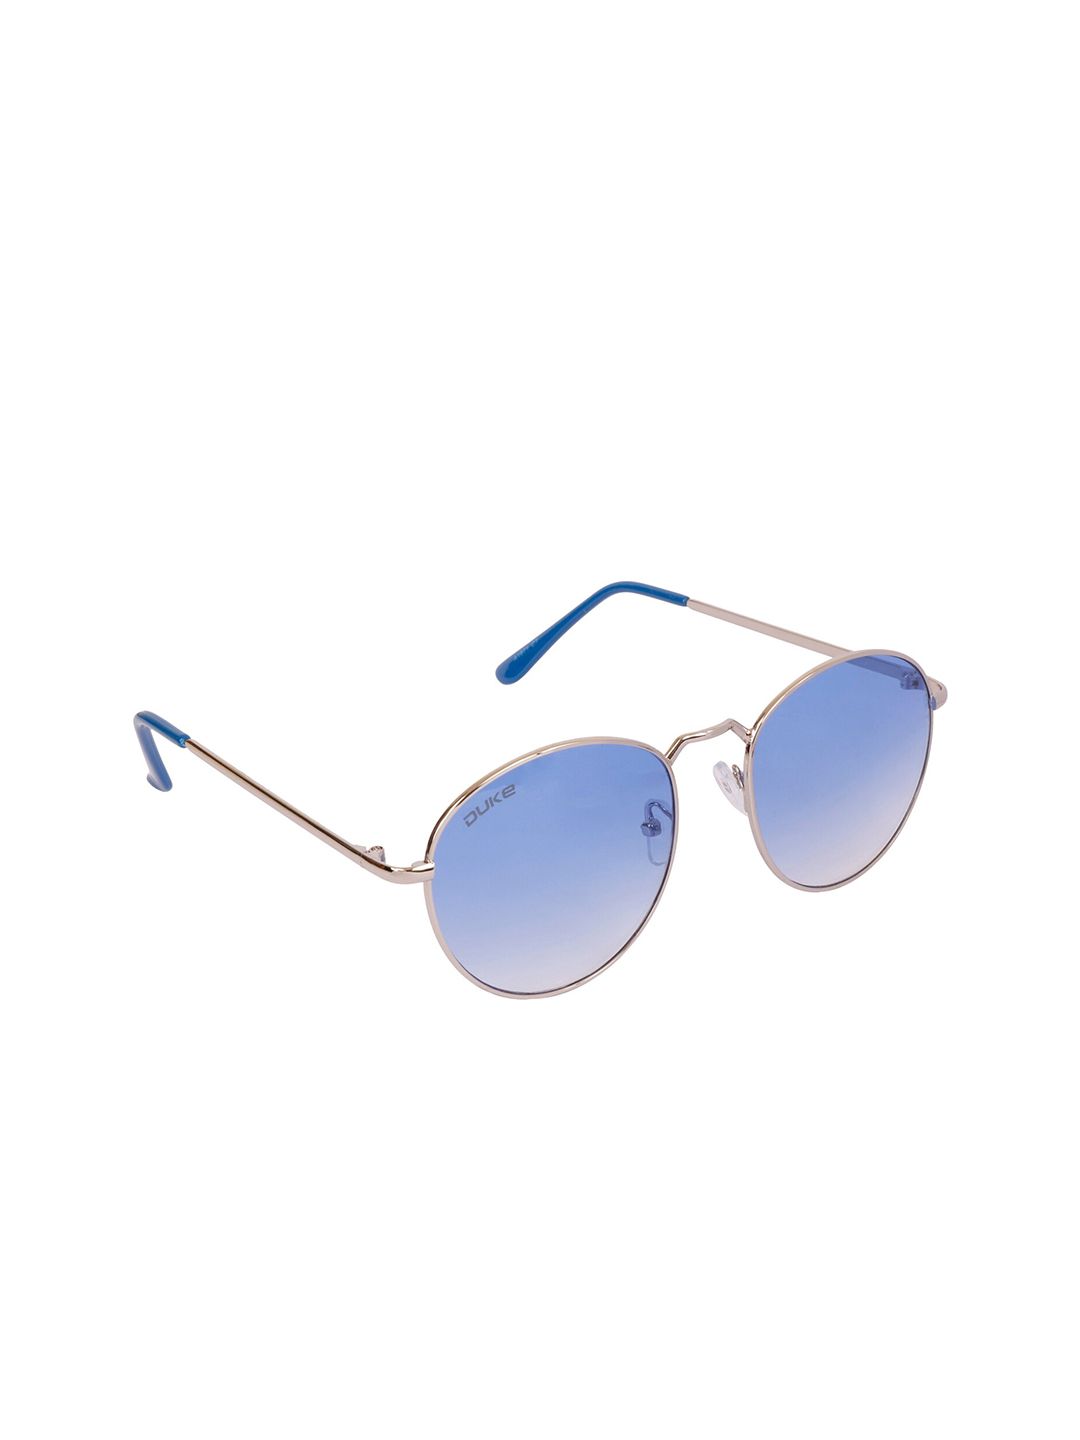 Duke Unisex Blue Lens & Gold-Toned Round UV Protected Lens Sunglasses Price in India